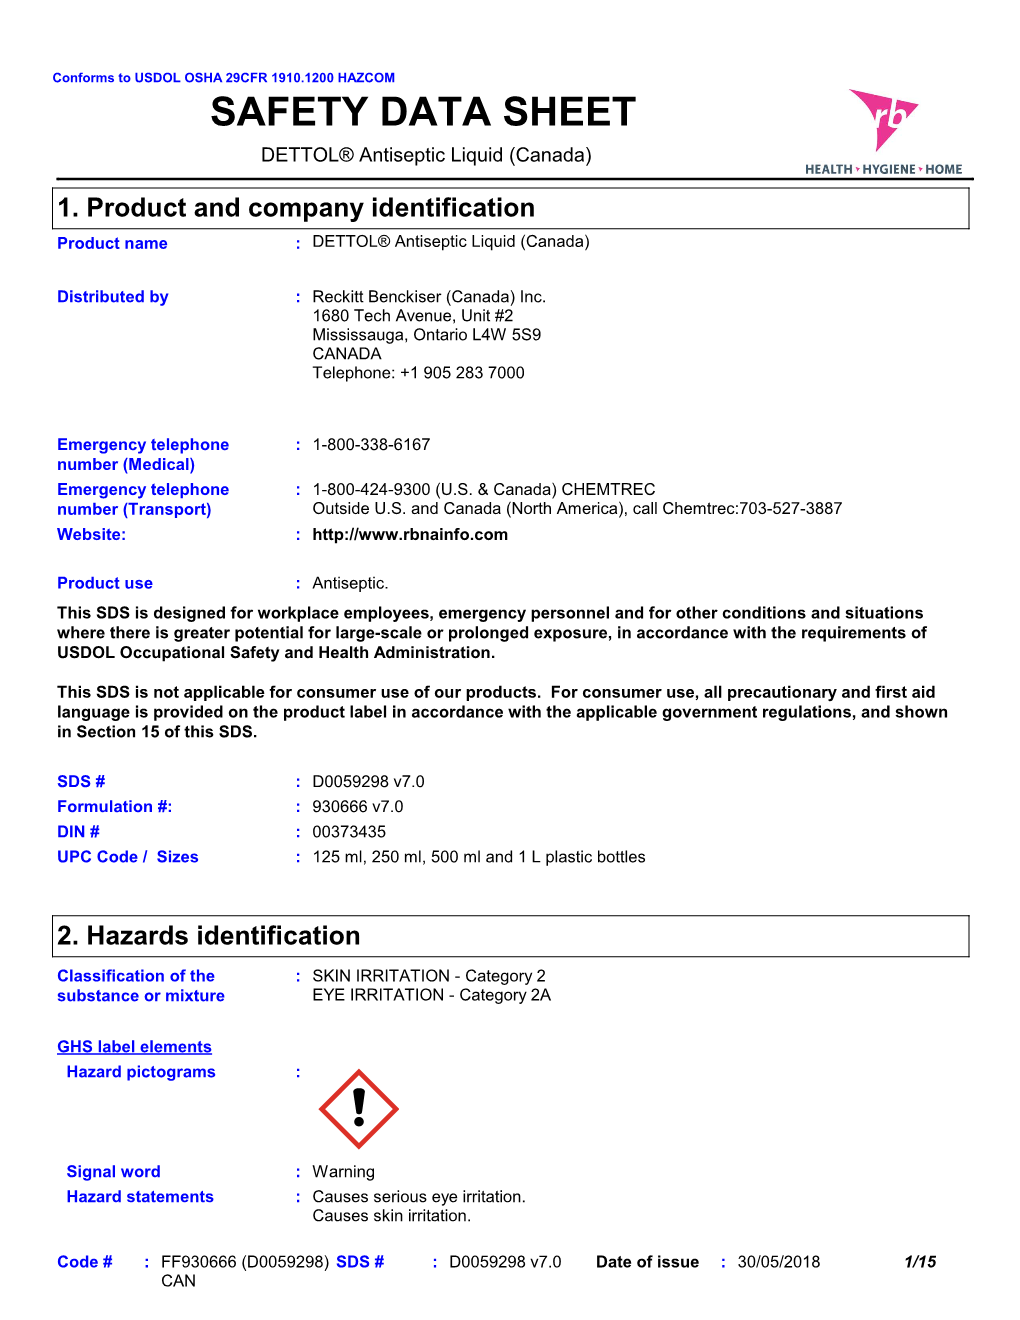 SAFETY DATA SHEET DETTOL® Antiseptic Liquid (Canada)